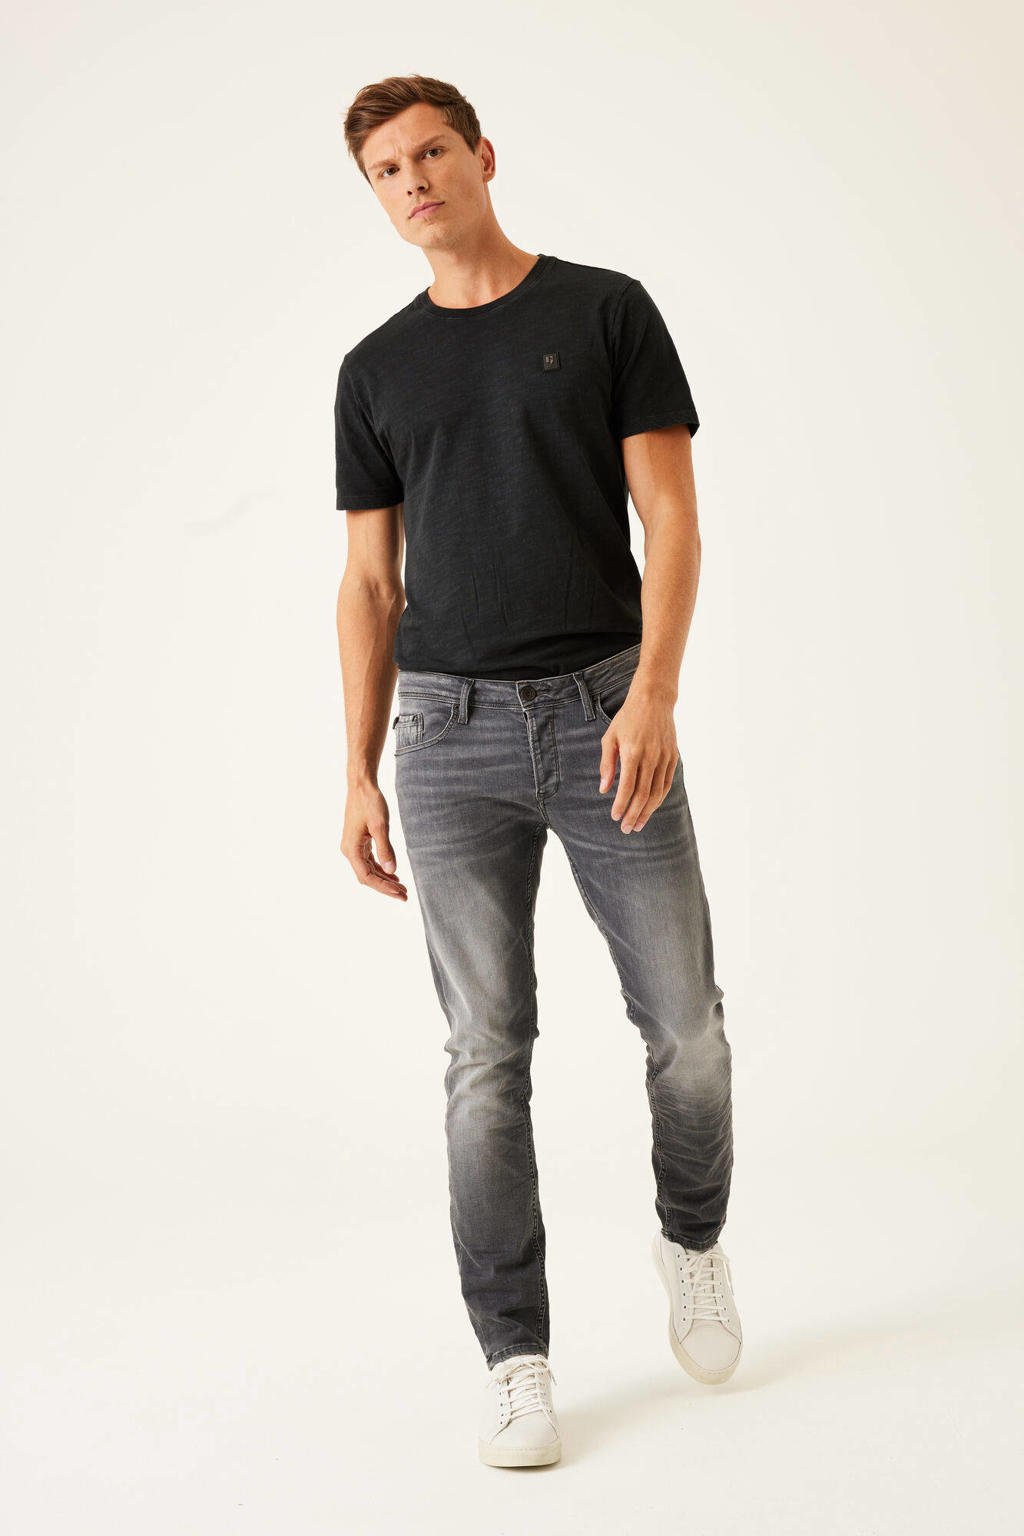 Garcia slim fit jeans Savio 630 medium used